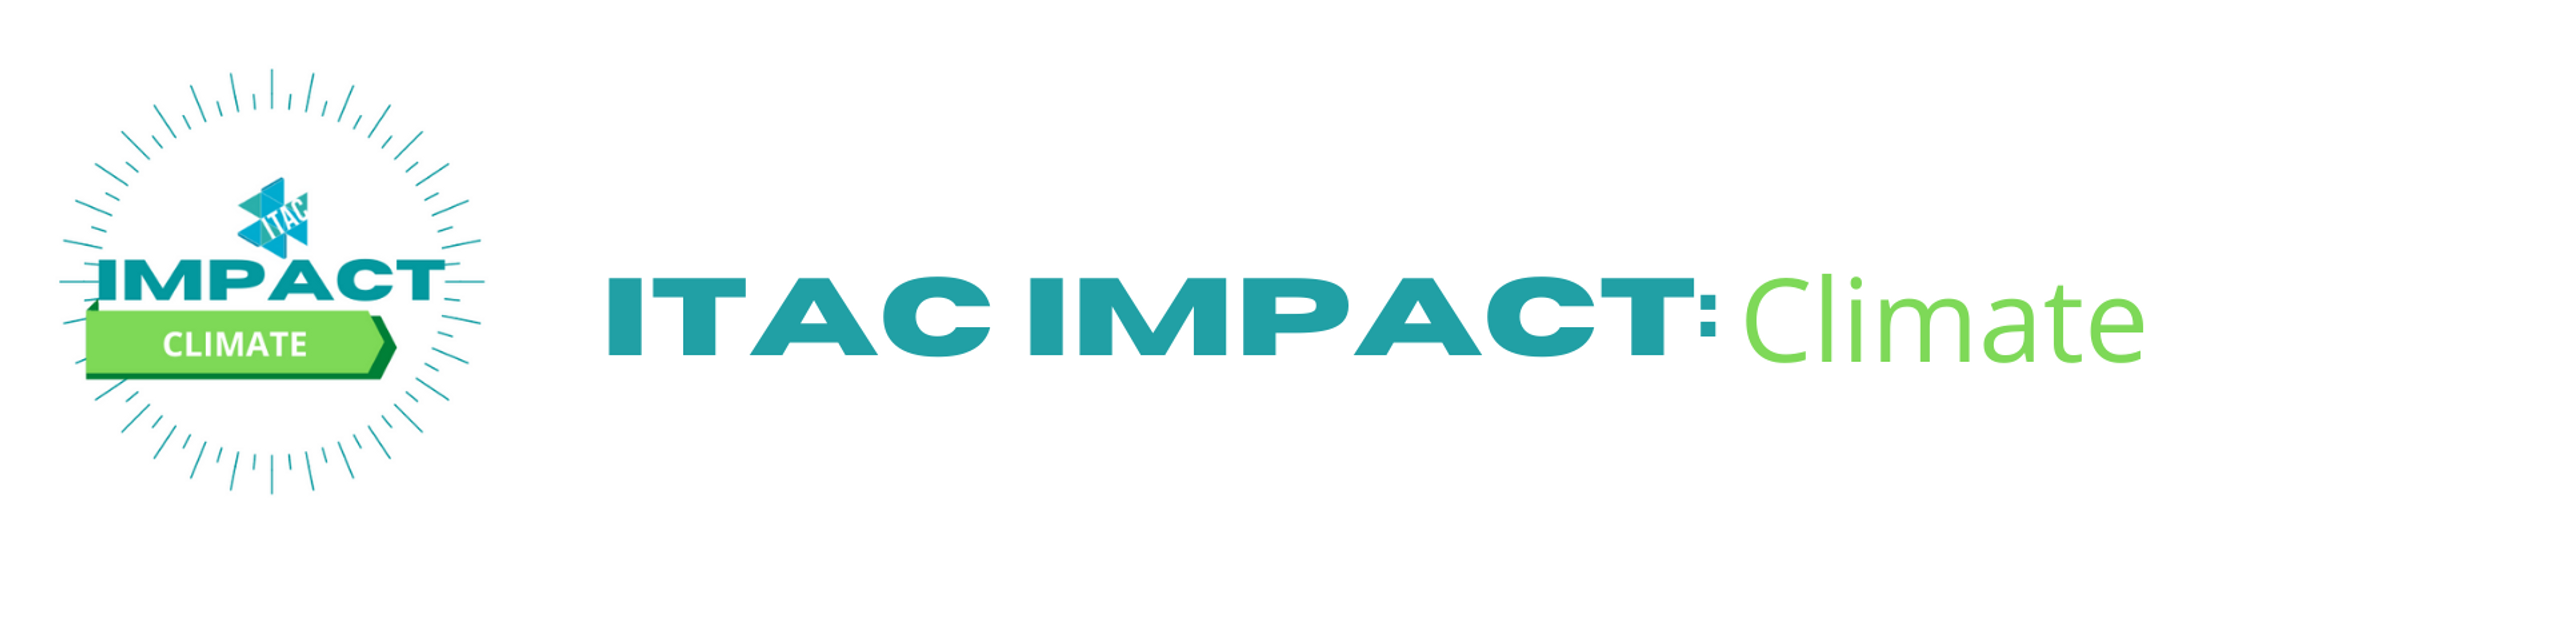 ITAC IMPACT CLIMATE